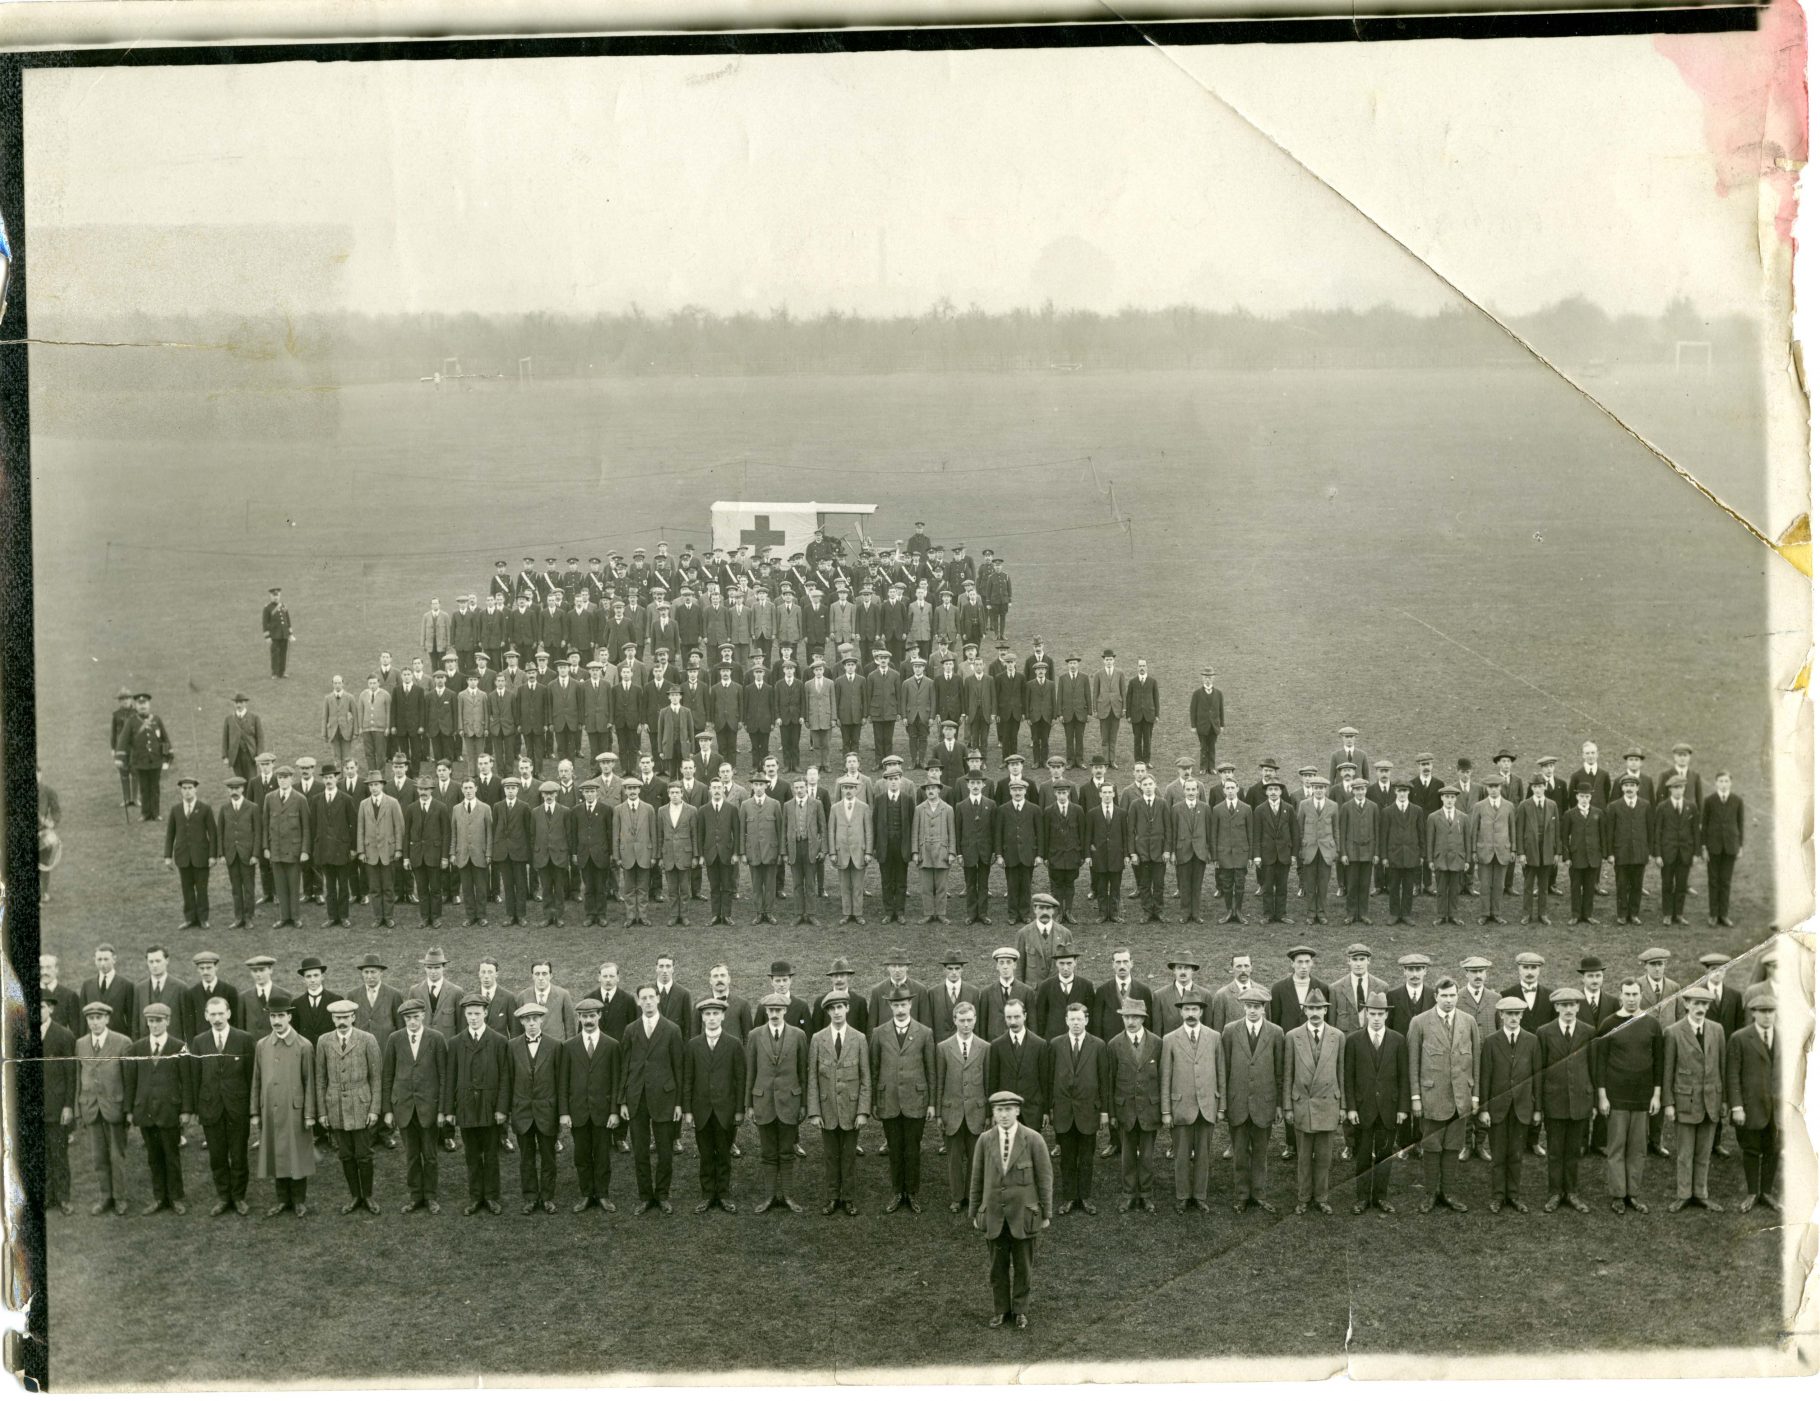 Polytechnic Volunteer Training Corps at Chiswick, 1914